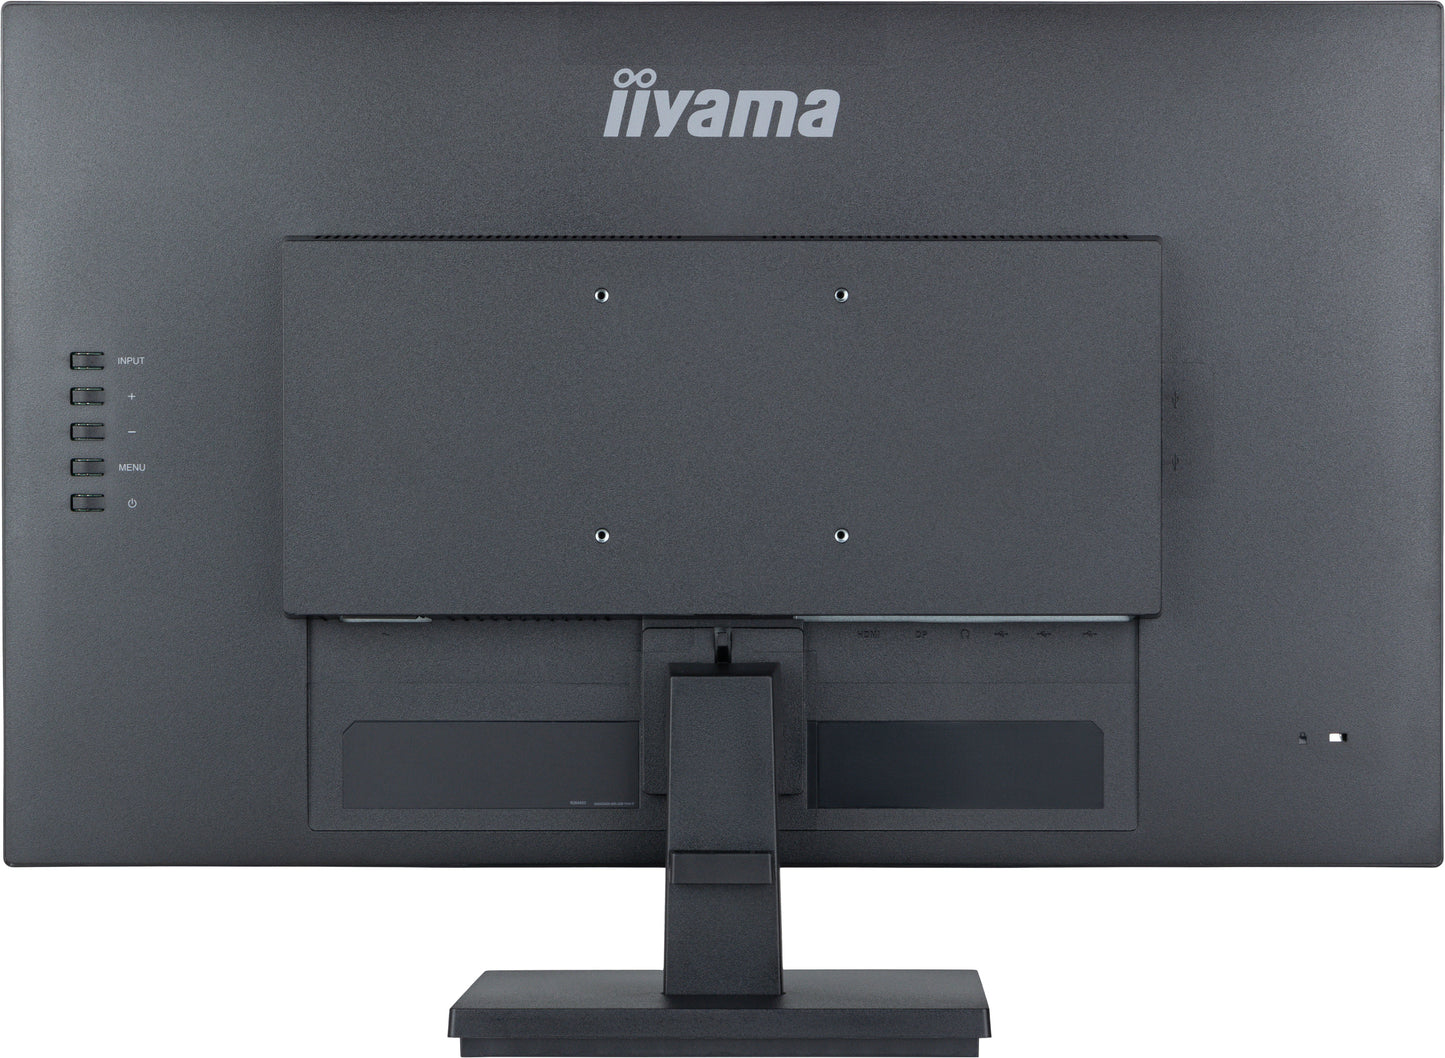 iiyama ProLite XU2792HSU-B6 27" IPS technology panel with USB hub and 100Hz refresh rate